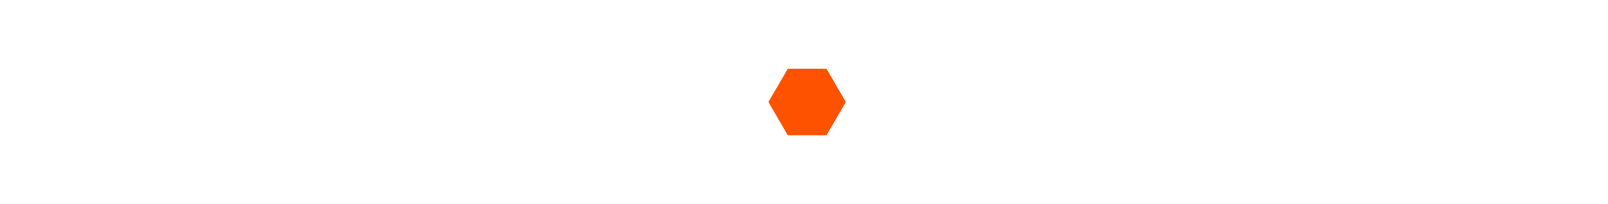 Procore logo large for dark backgrounds (transparent PNG)